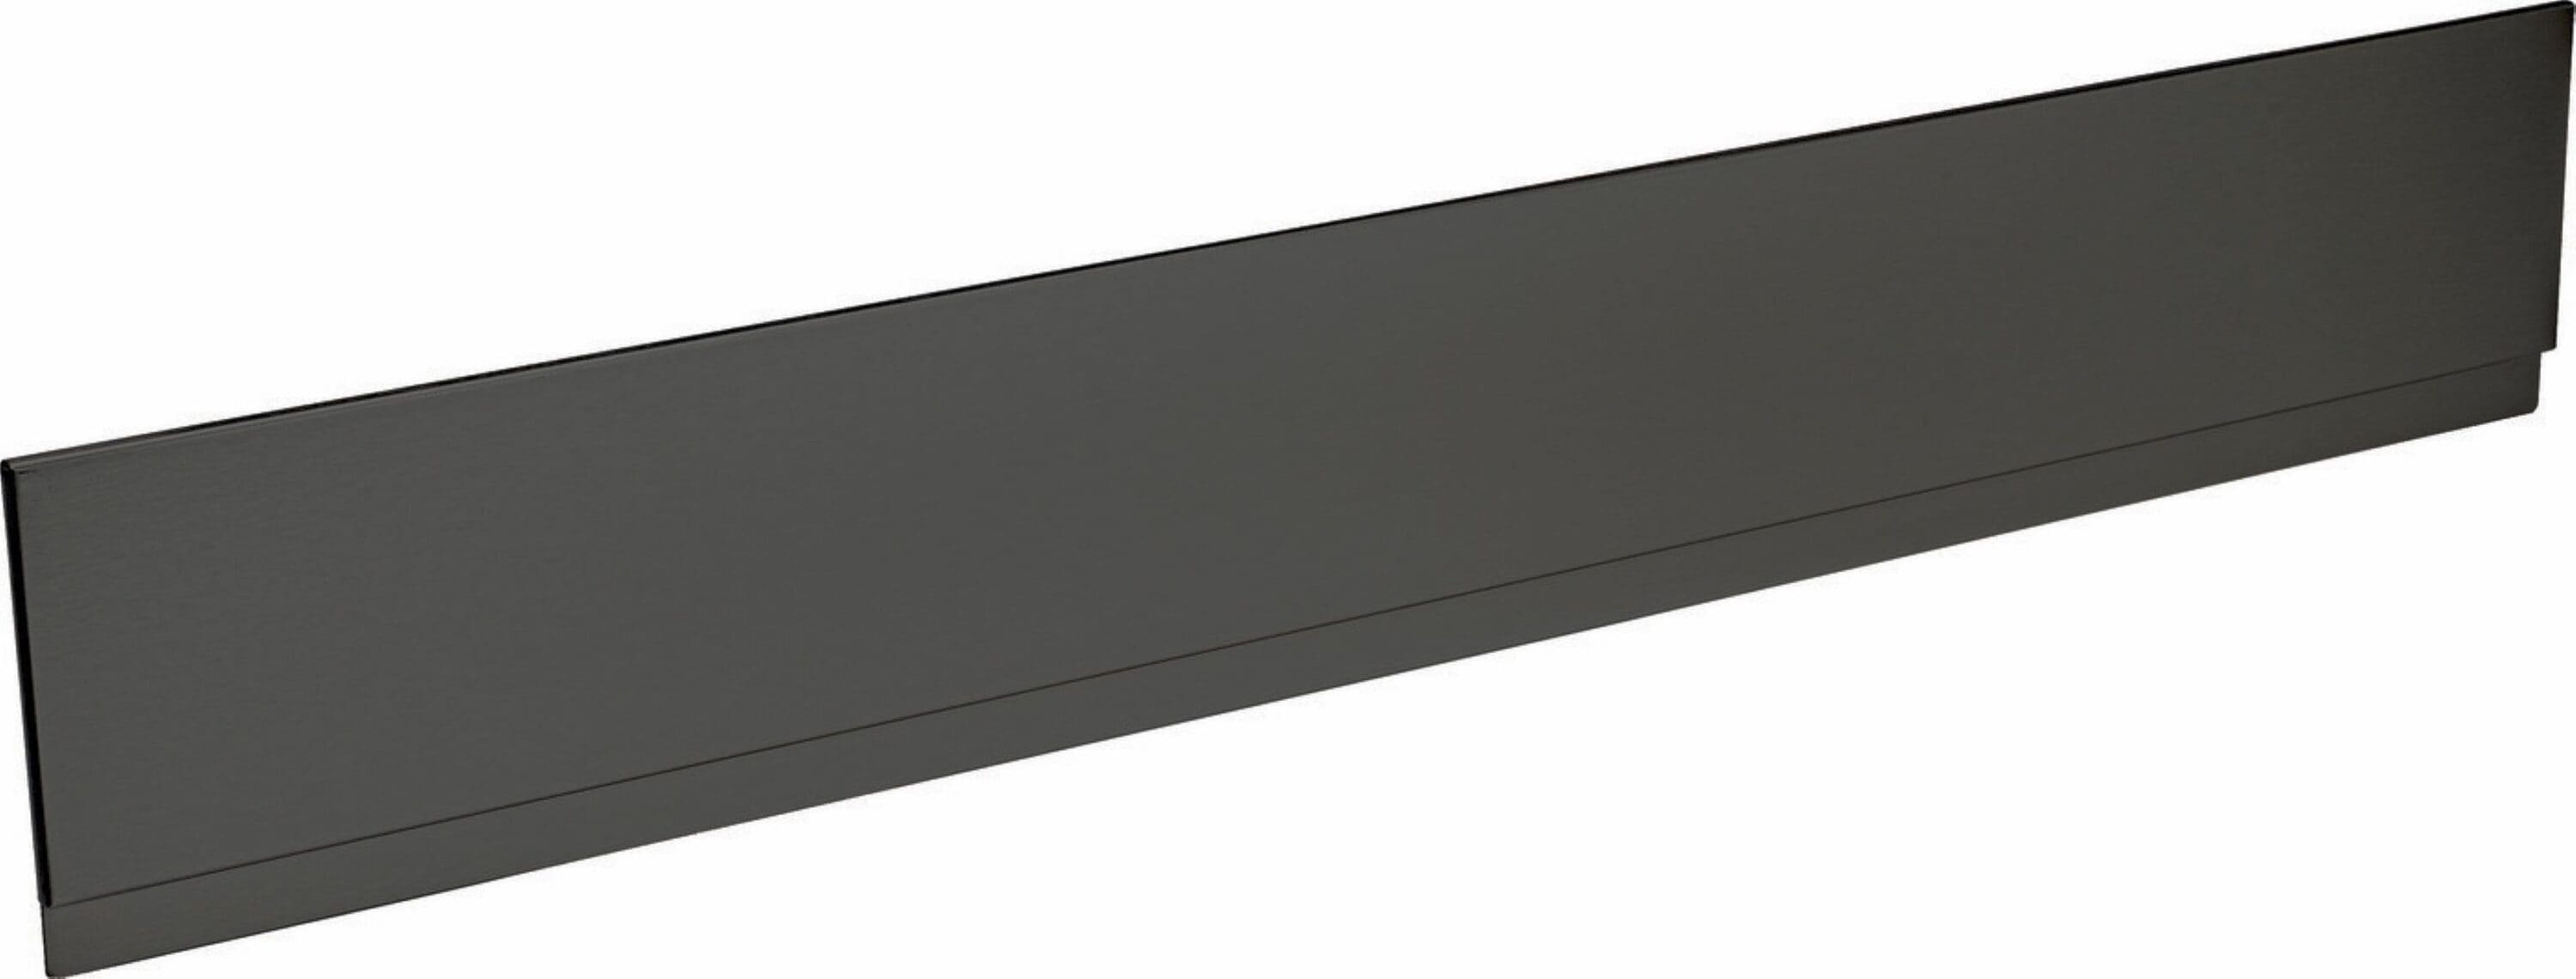 Best Buy: Backguard for GE Café 30 Freestanding Ranges Stainless steel  JXS80SS